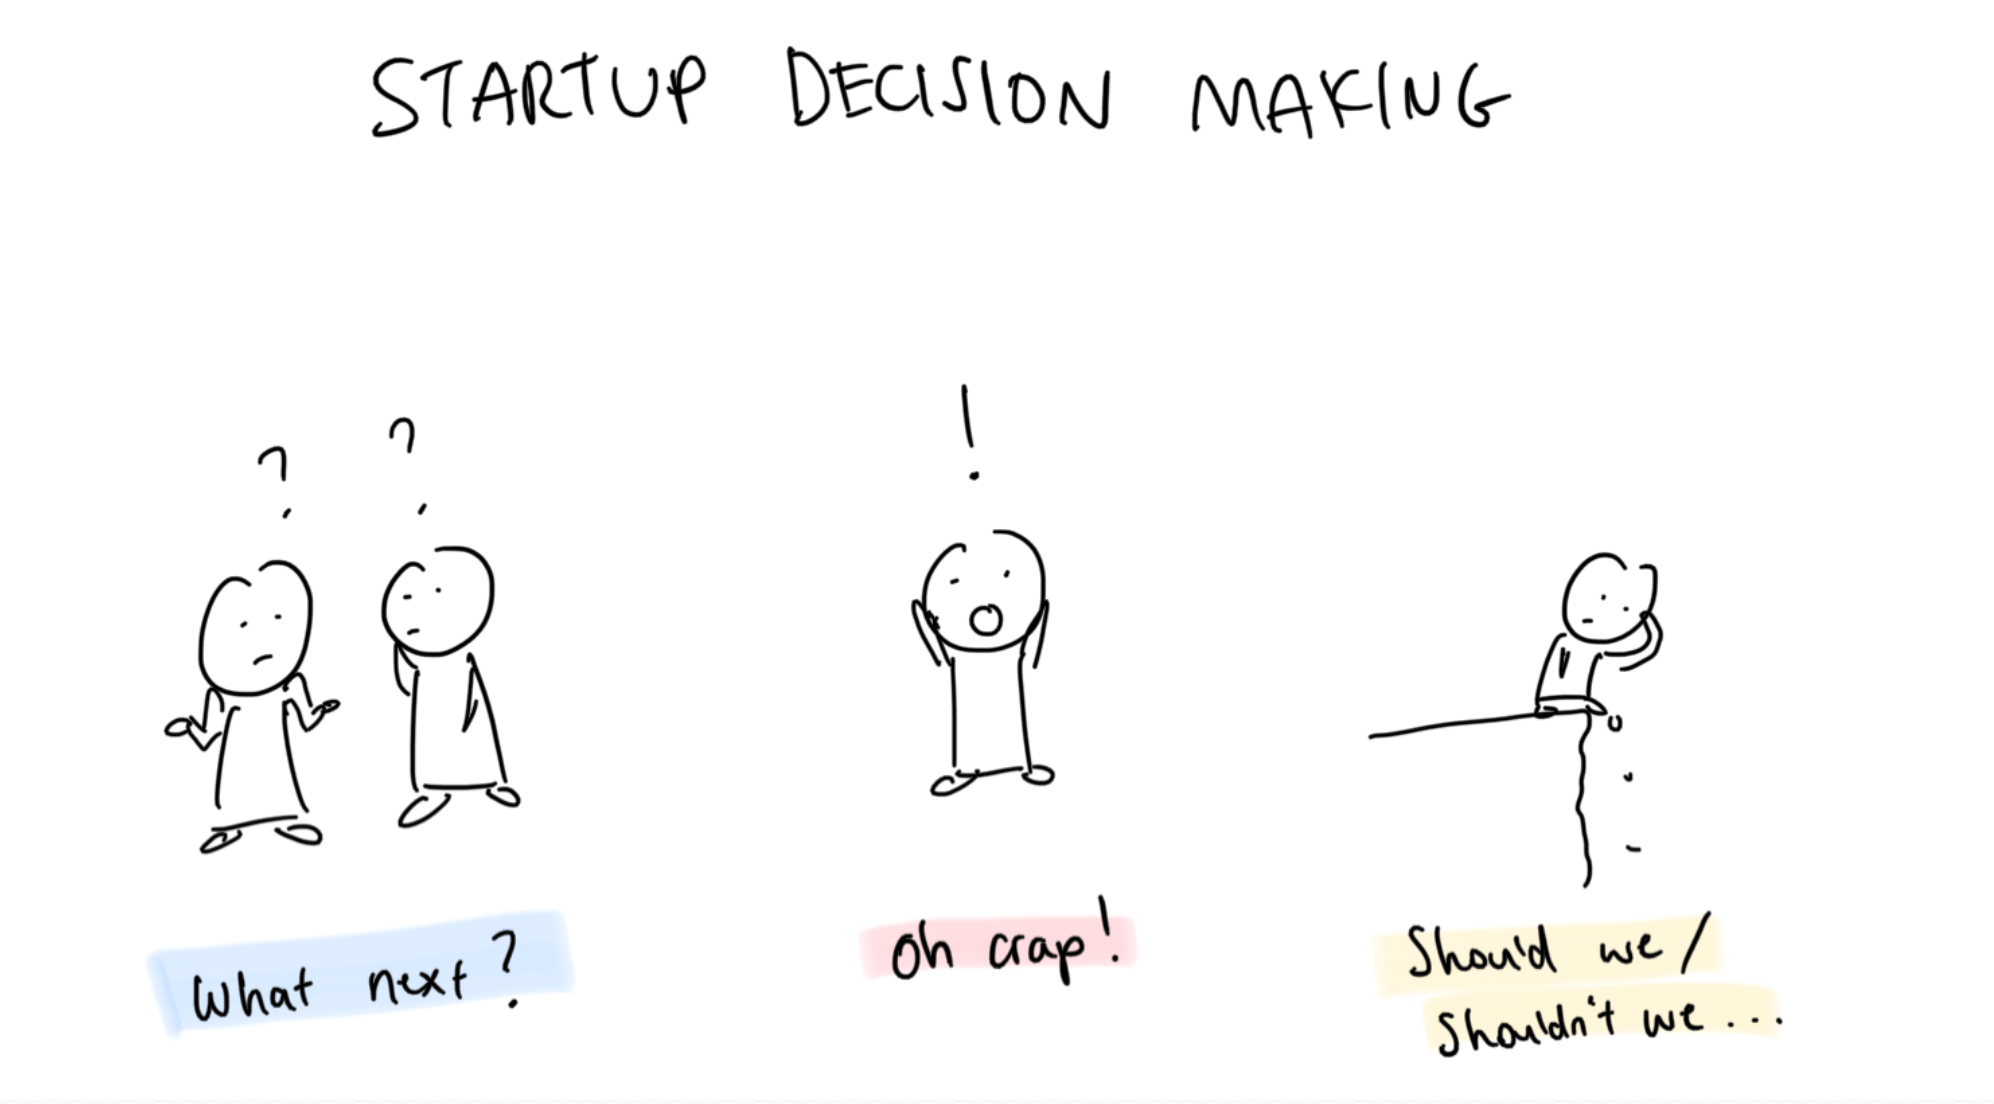 decision-making